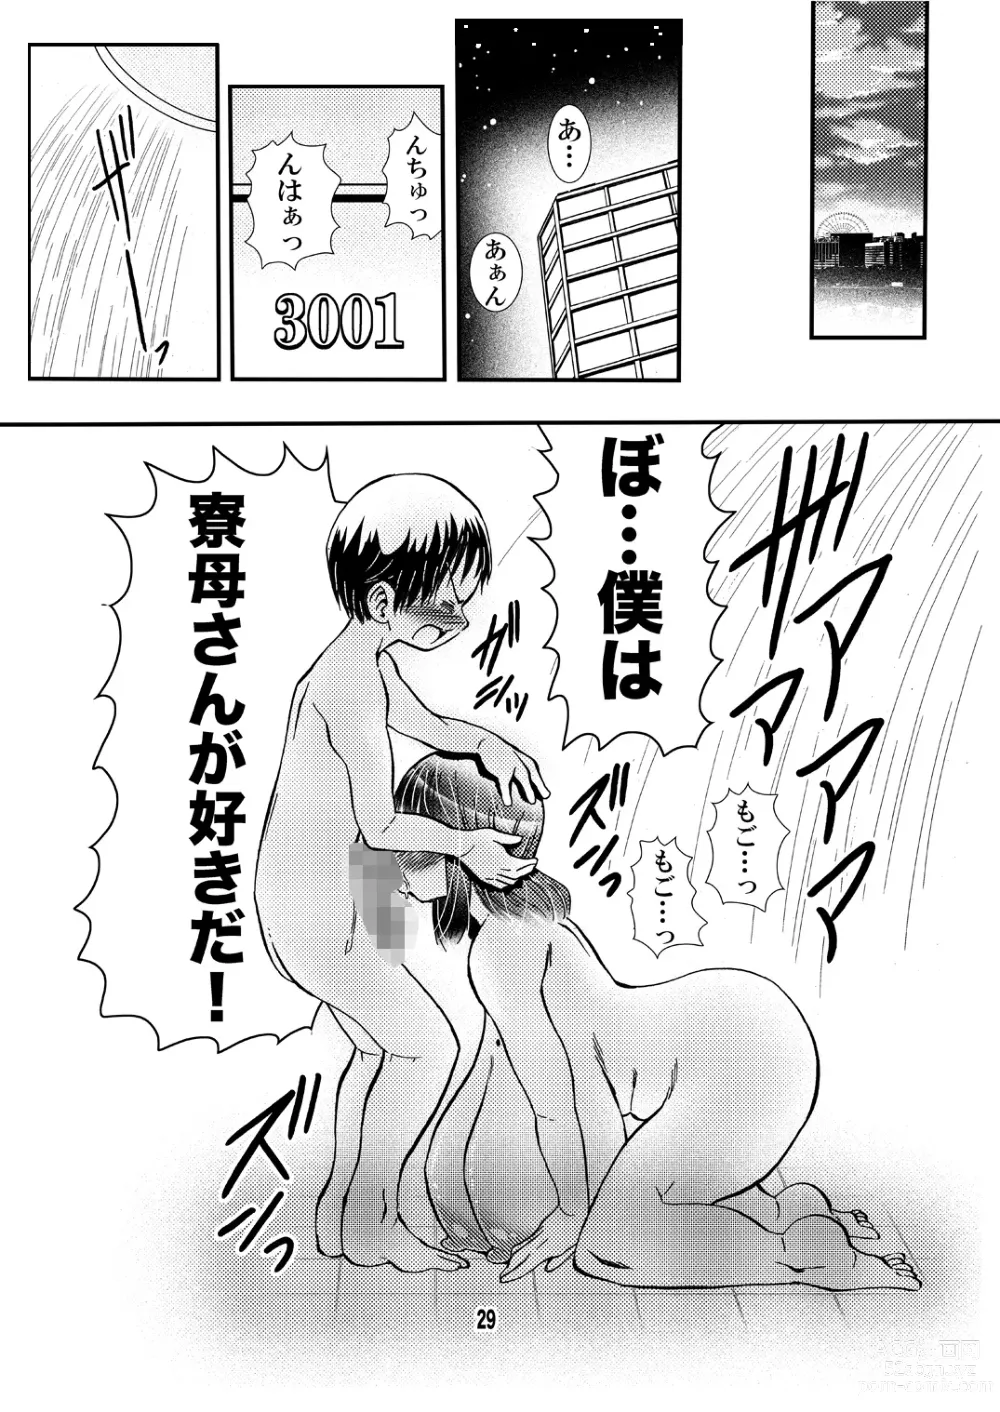 Page 29 of doujinshi Ryoubo-san no Oppai wa Kao yori Ookii